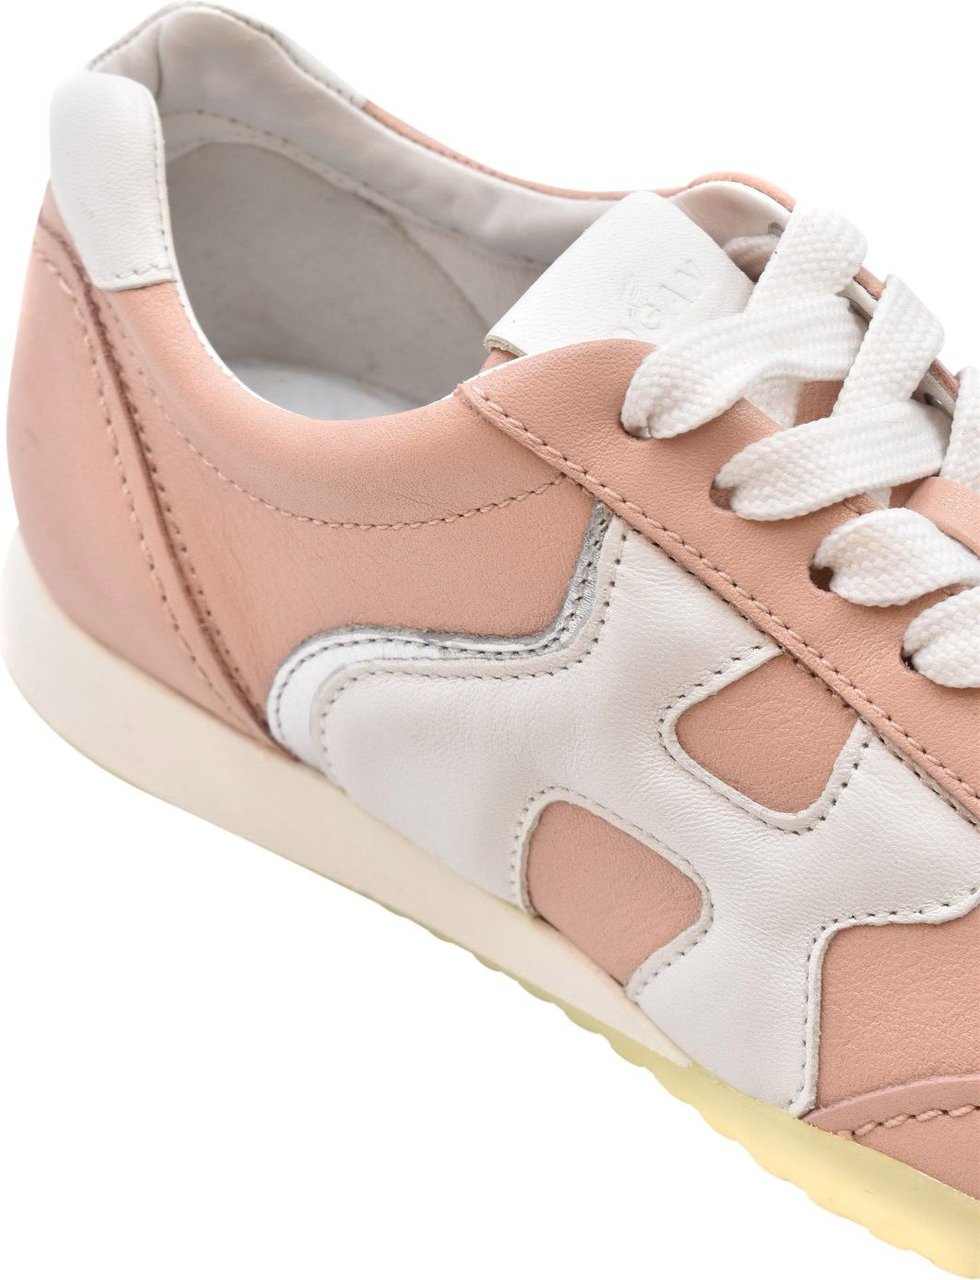 HOGAN Sneakers Pink Roze